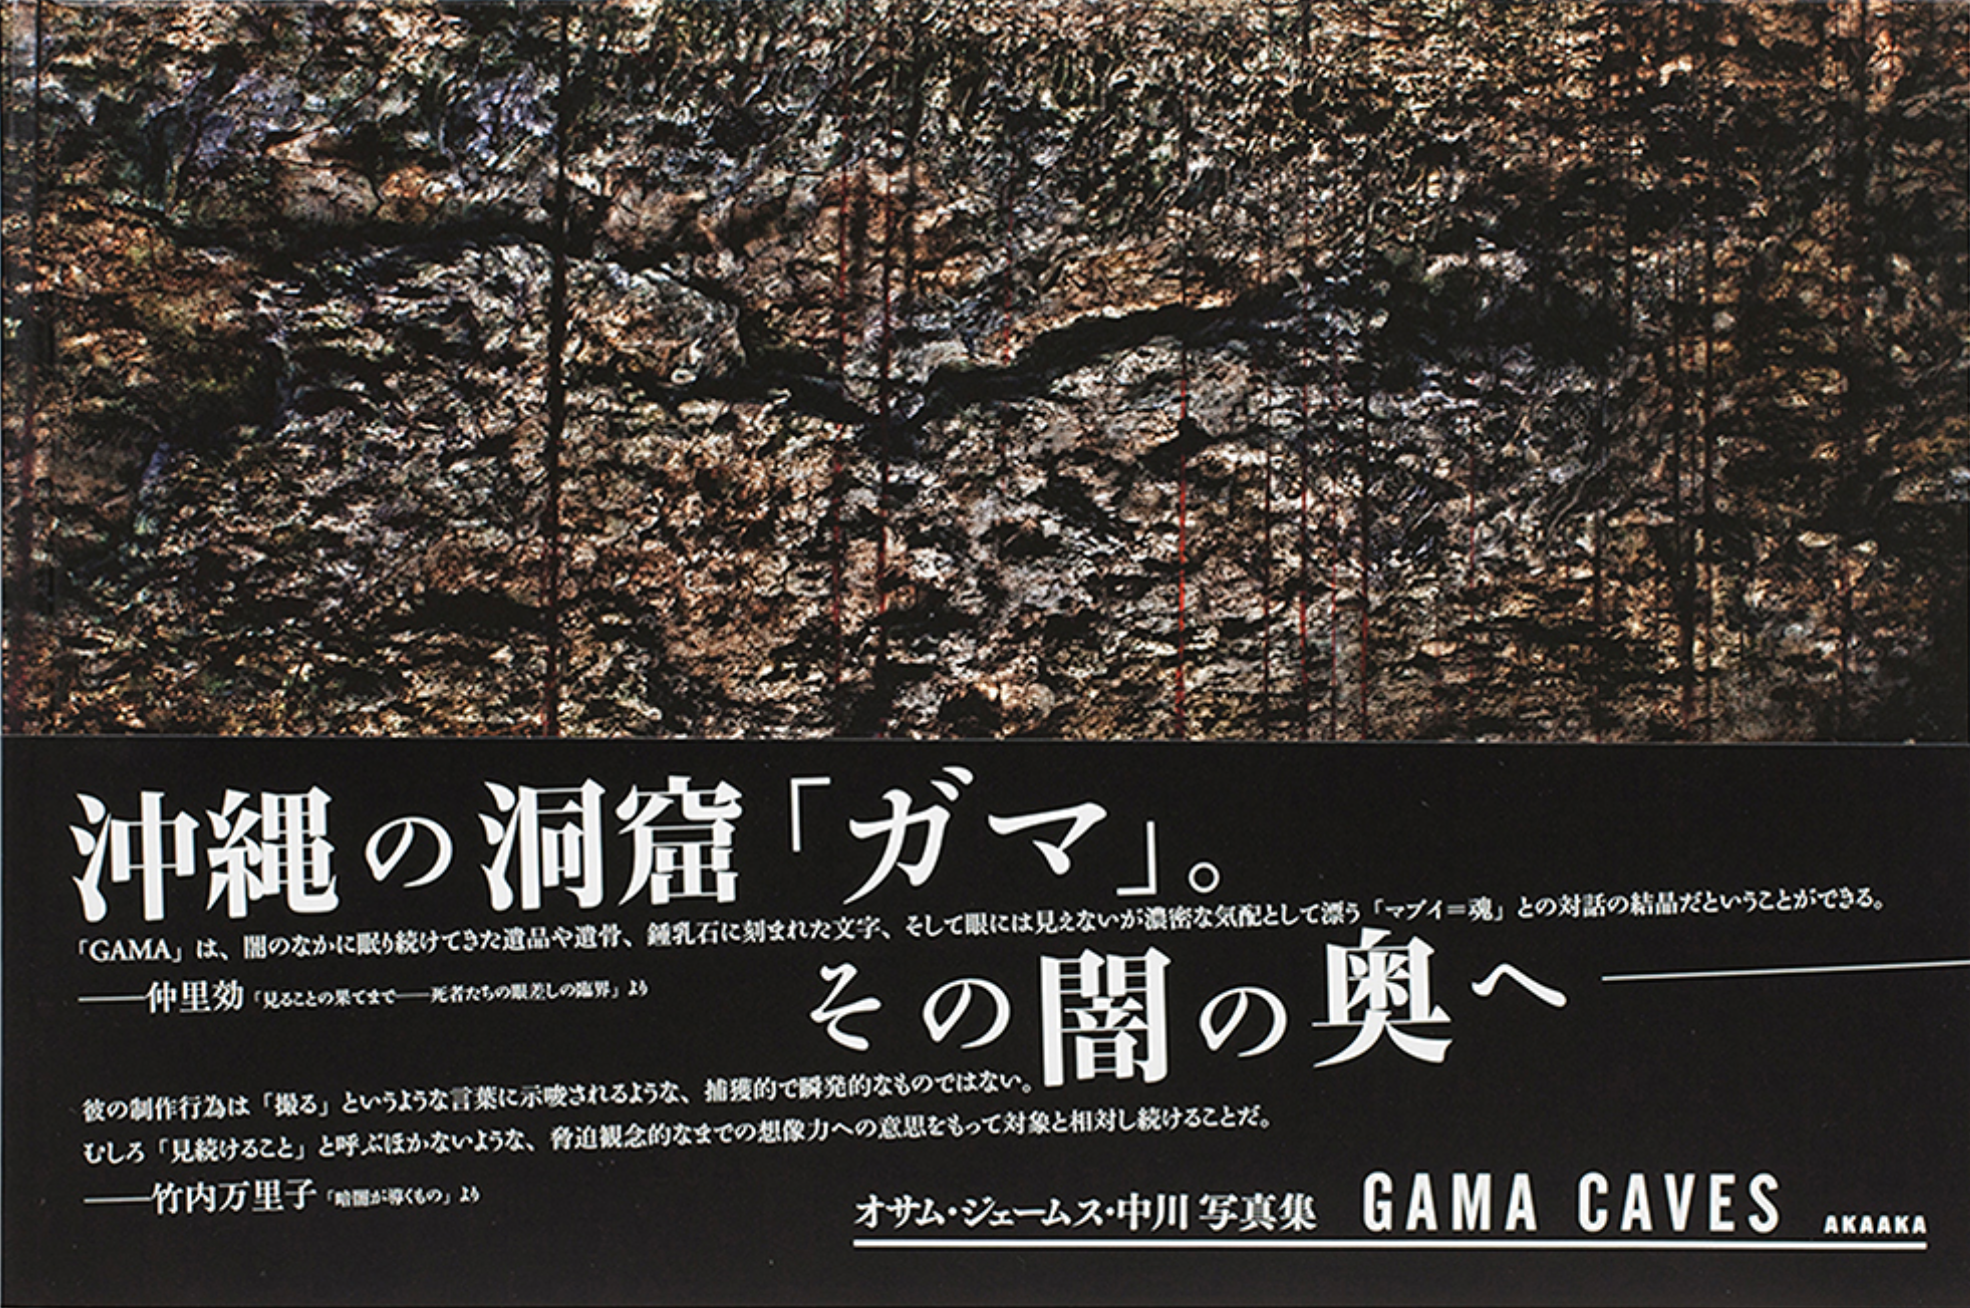 Gama Caves